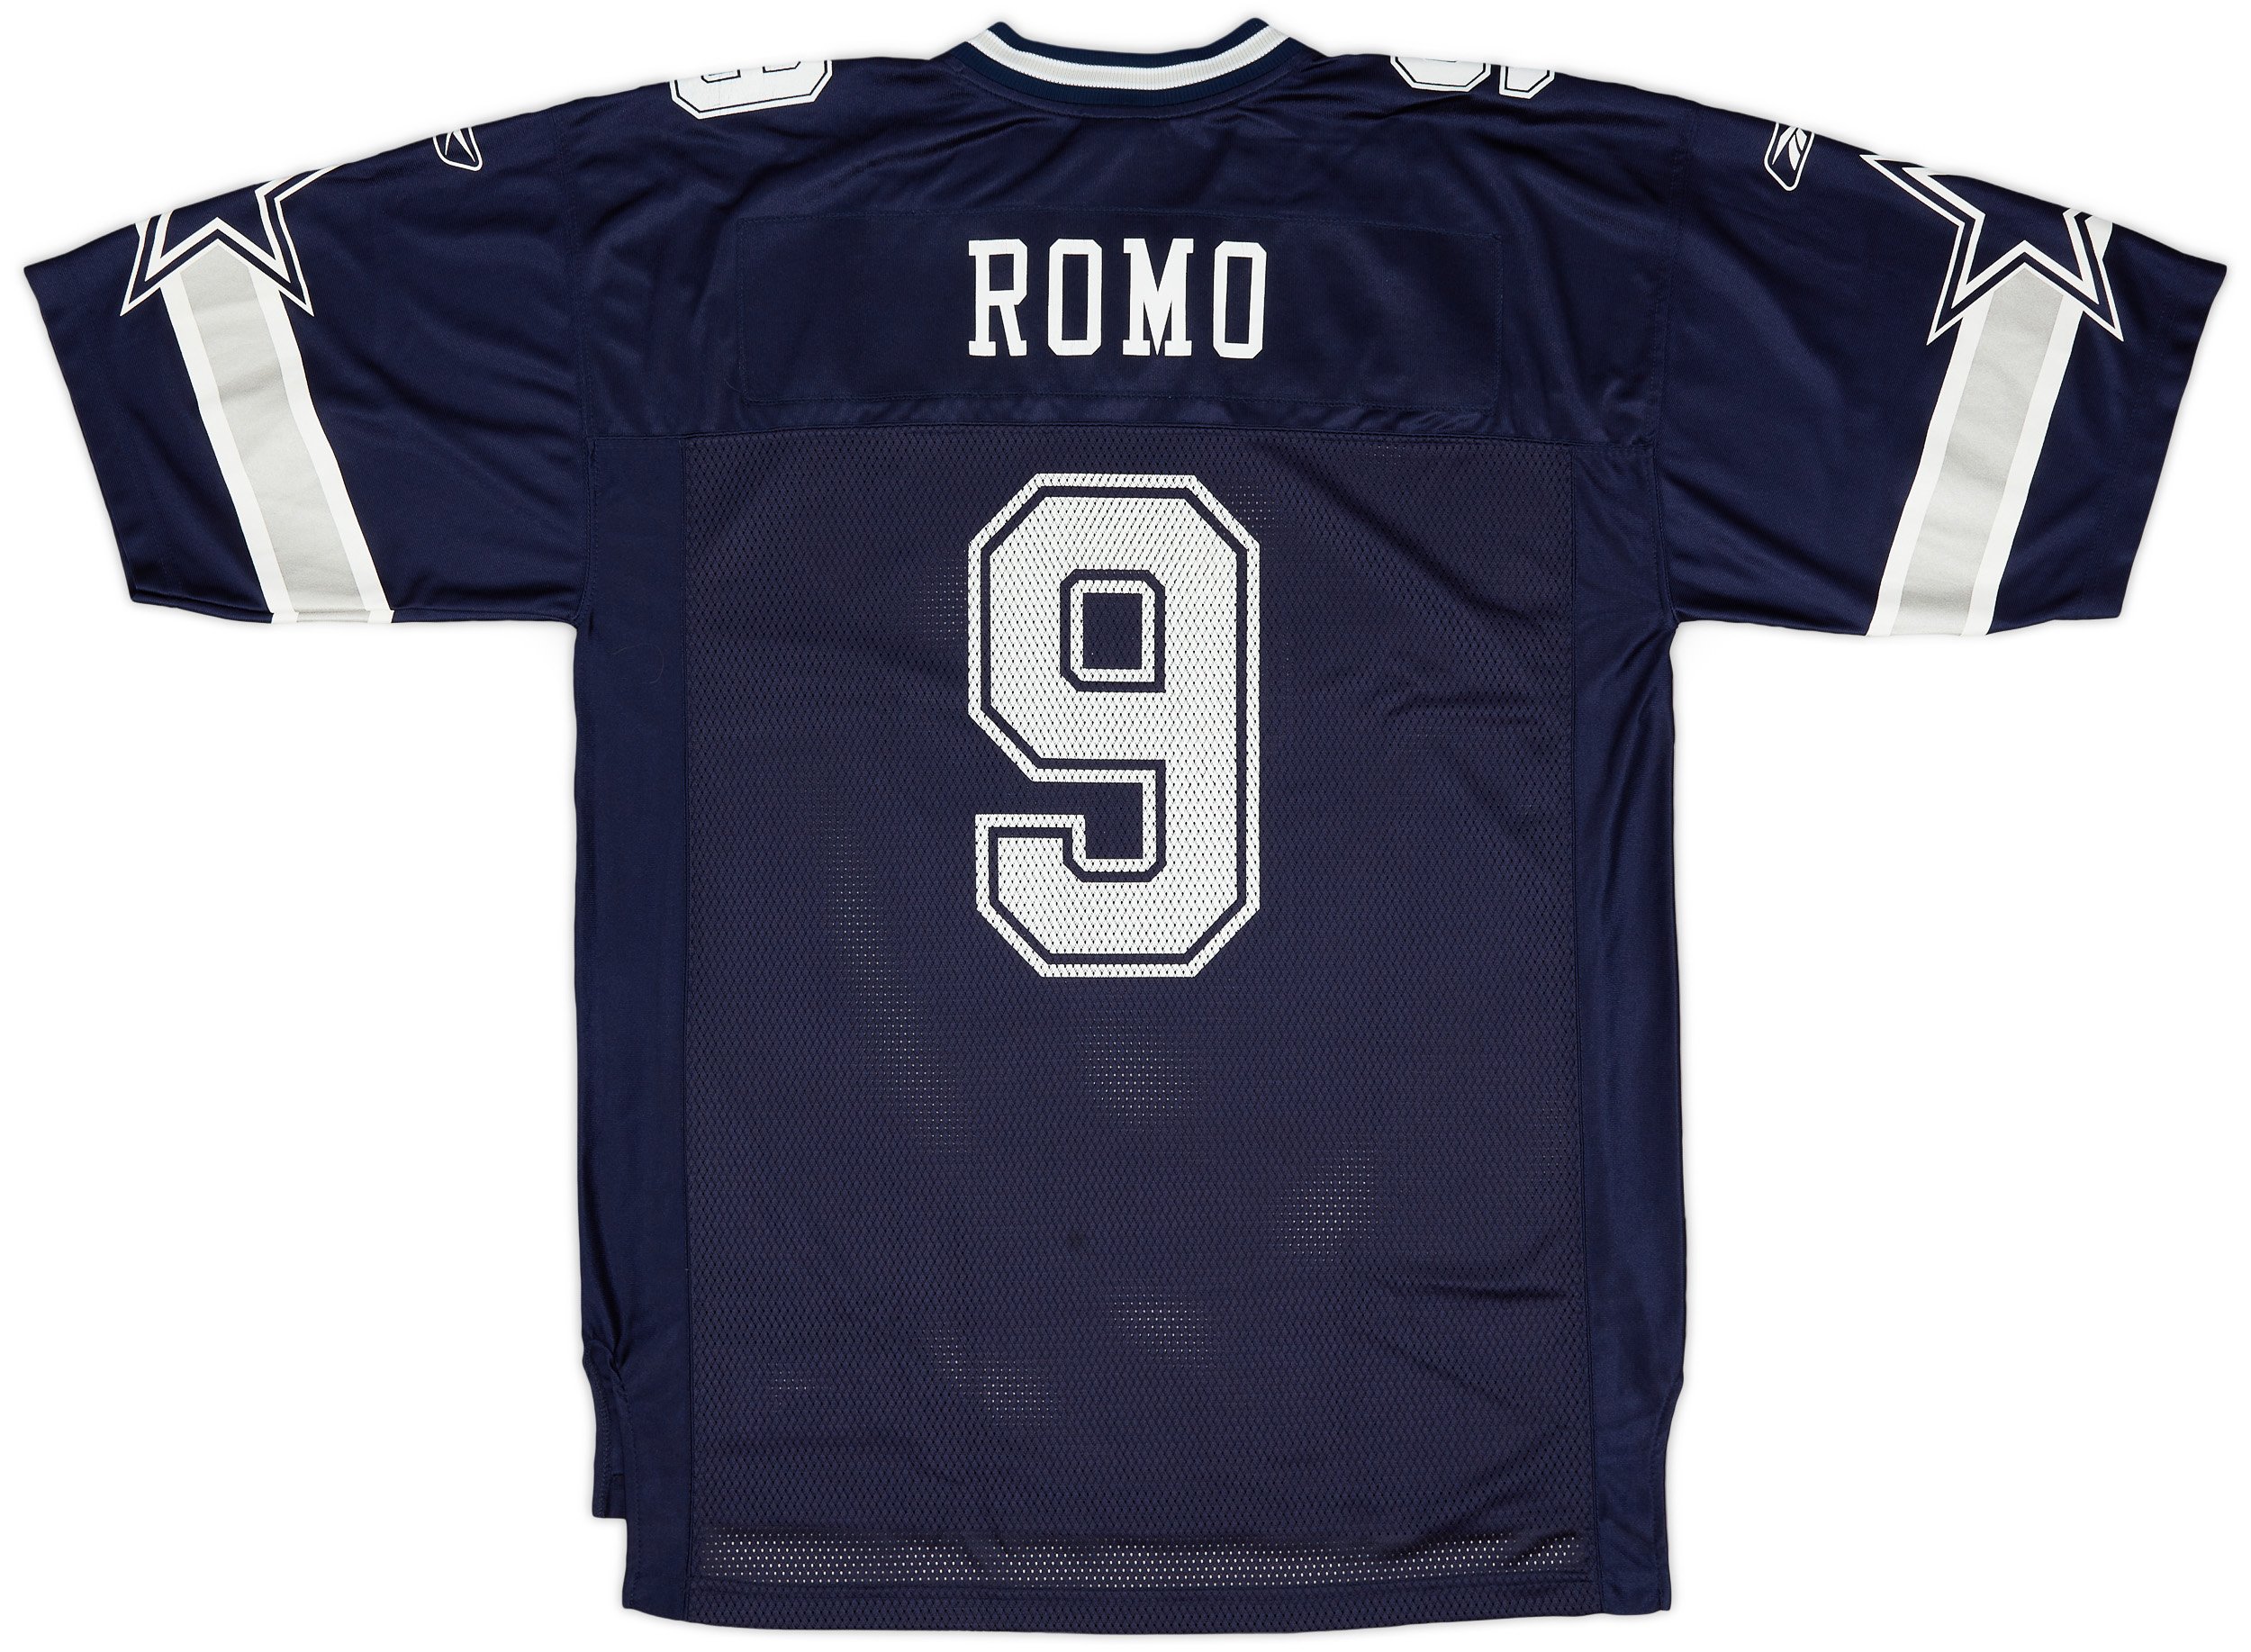 2007 Dallas Cowboys Romo #9 Reebok On Field Home Jersey (Excellent) L